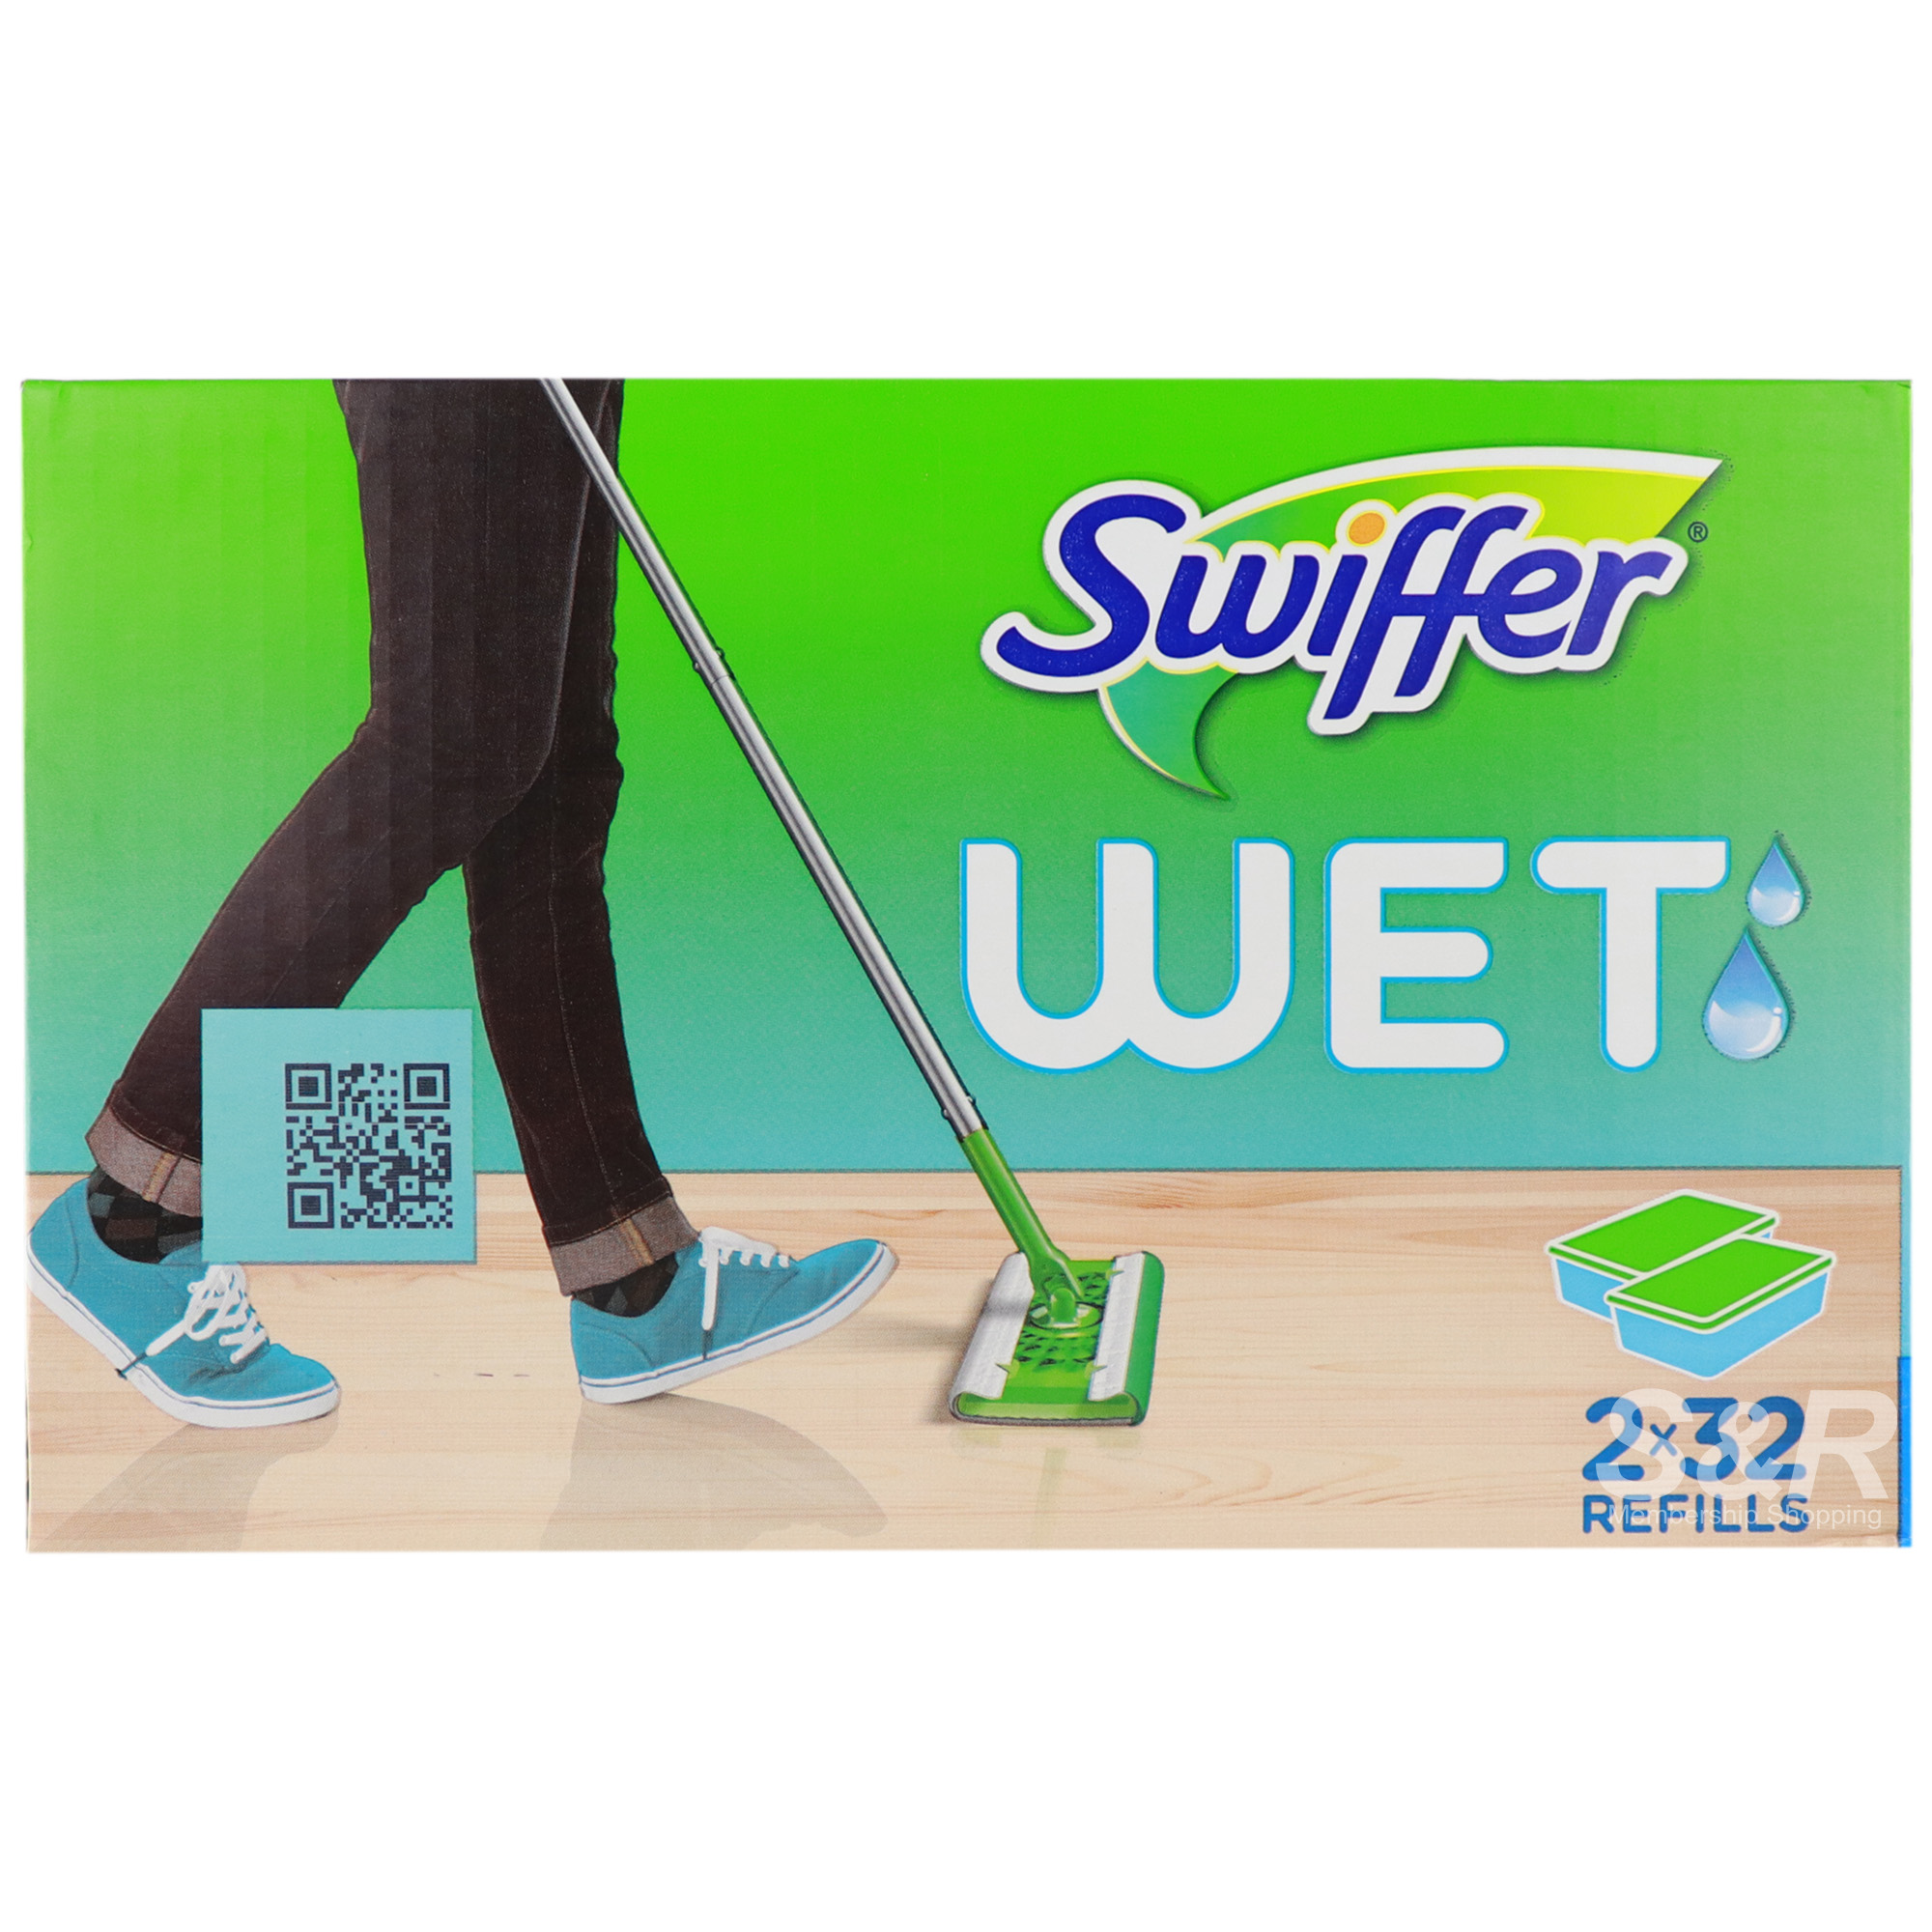 Swiffer Wet Mopping Cloths 64pcs